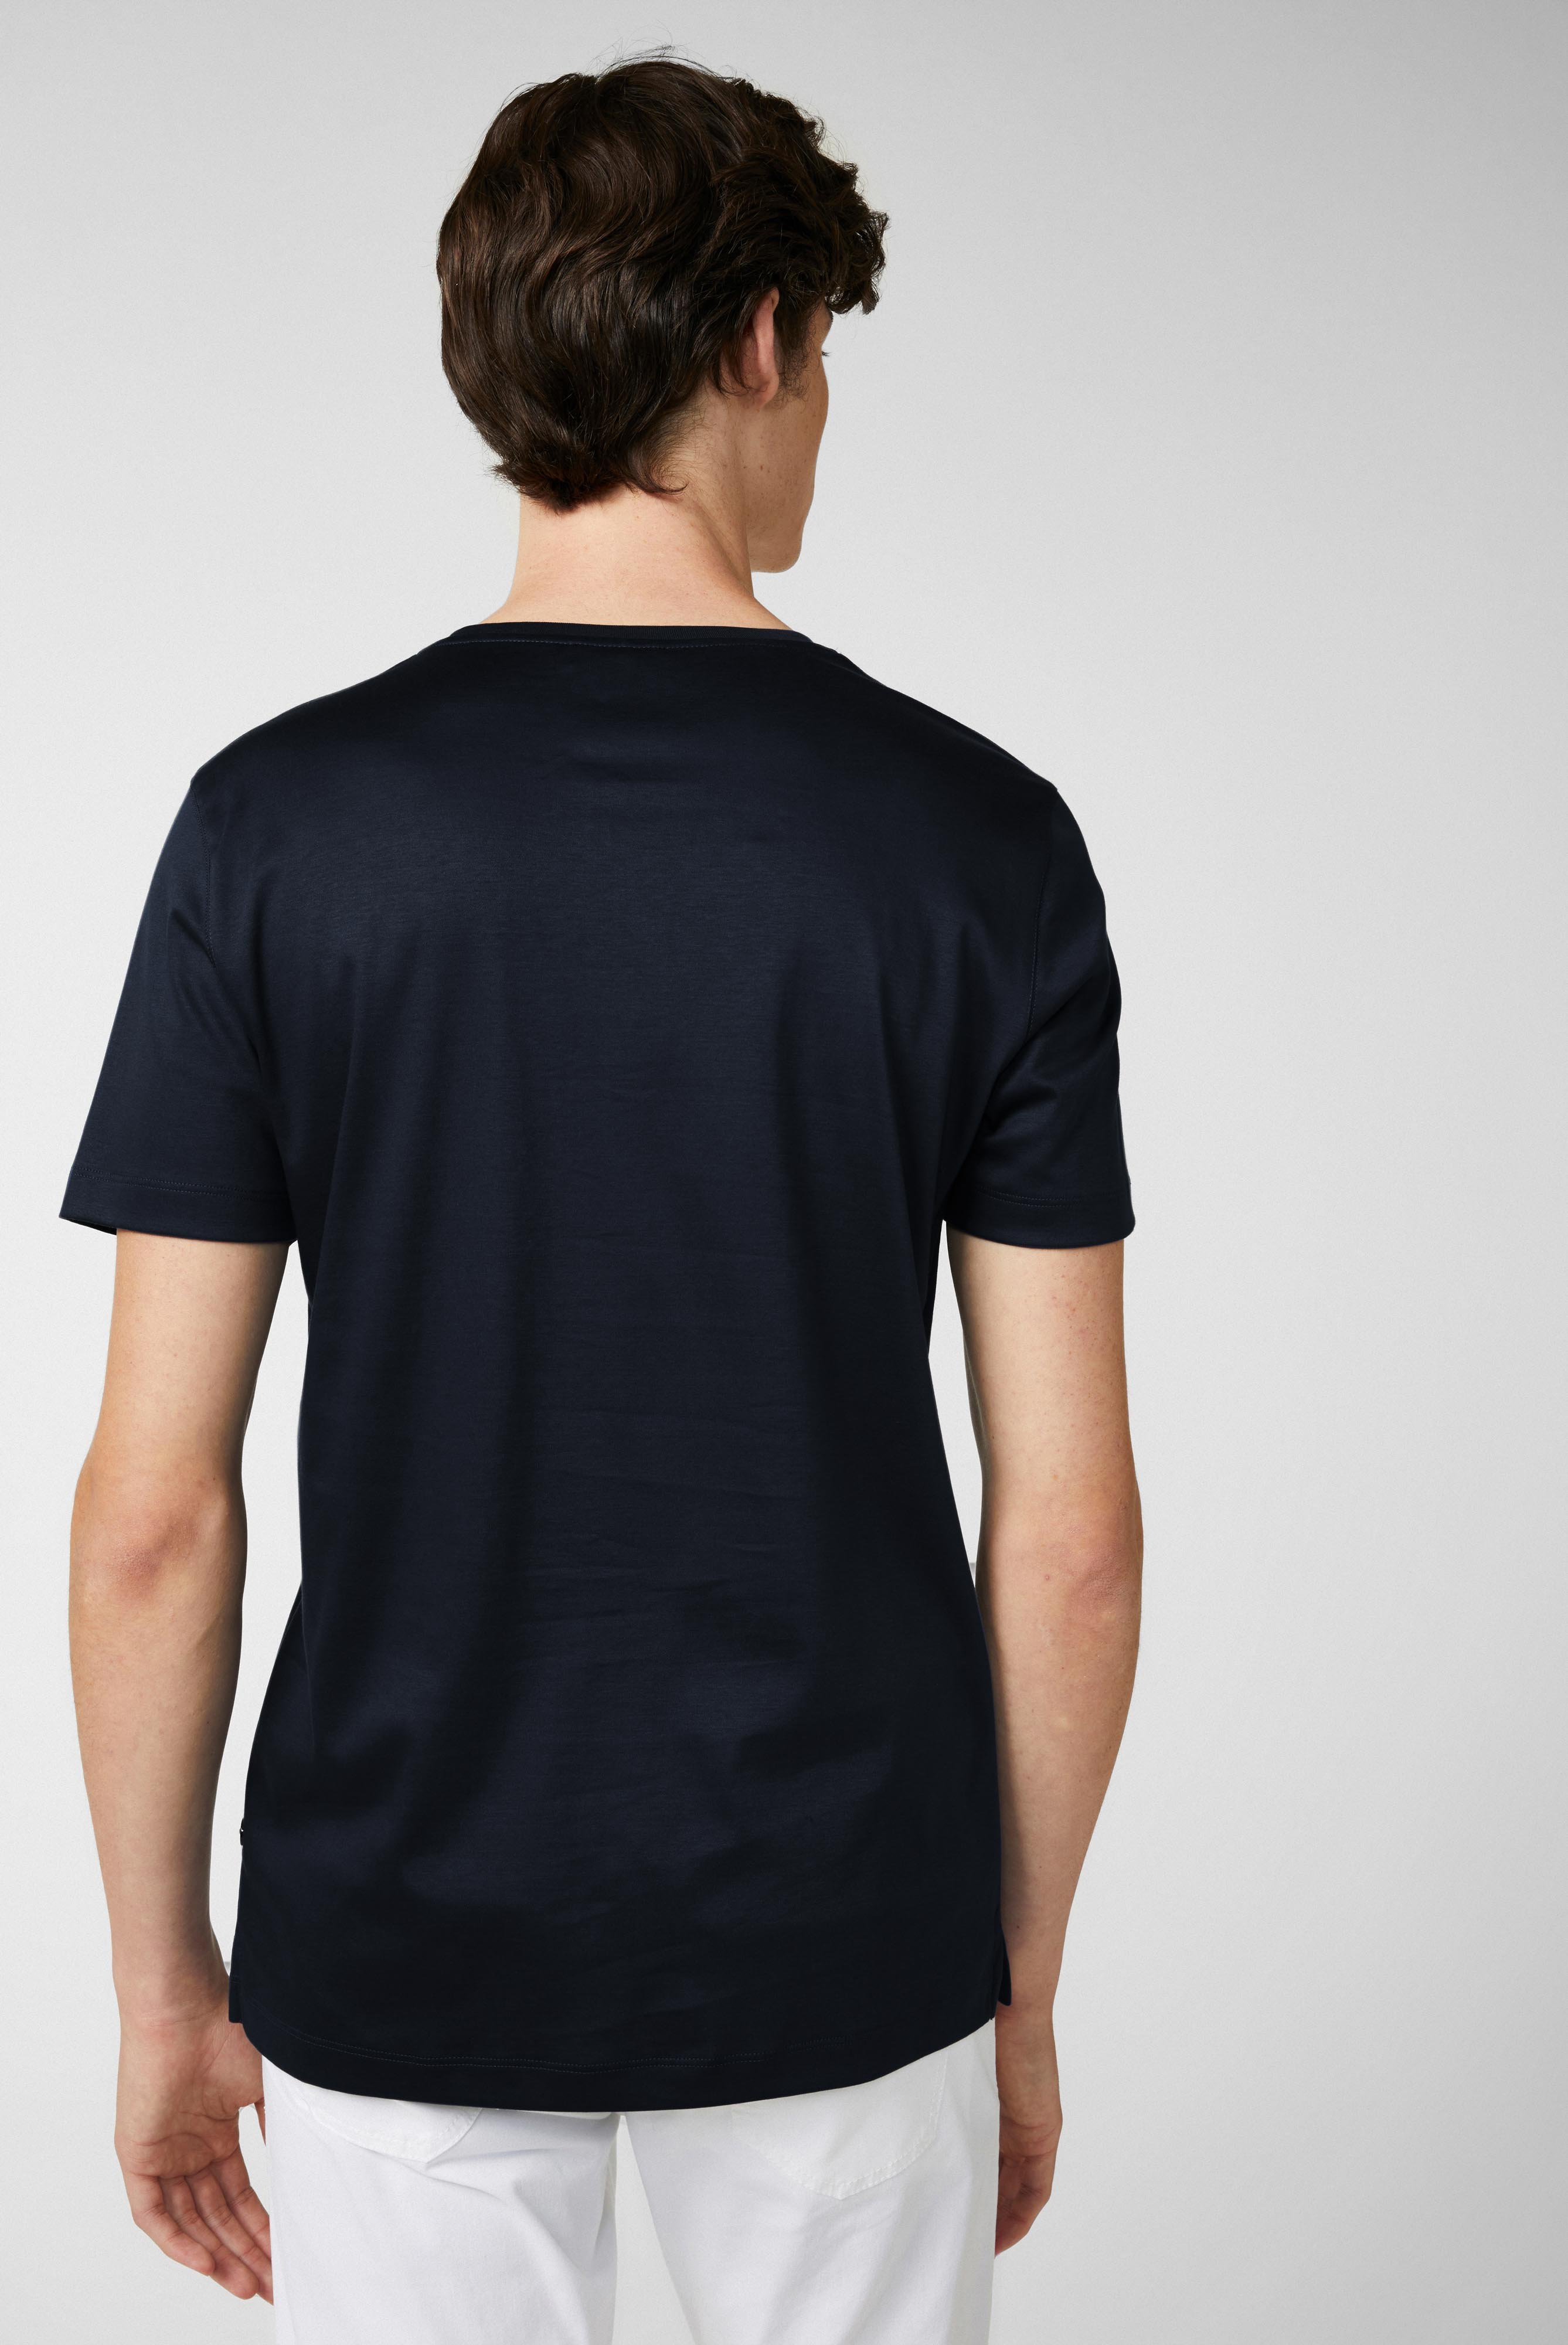 T-Shirts+Kurzarm Herren T-Shirt Modern Fit Rundhals aus Swiss-Cotton Dunkelblau+20.1717.UX.180031.790.XS